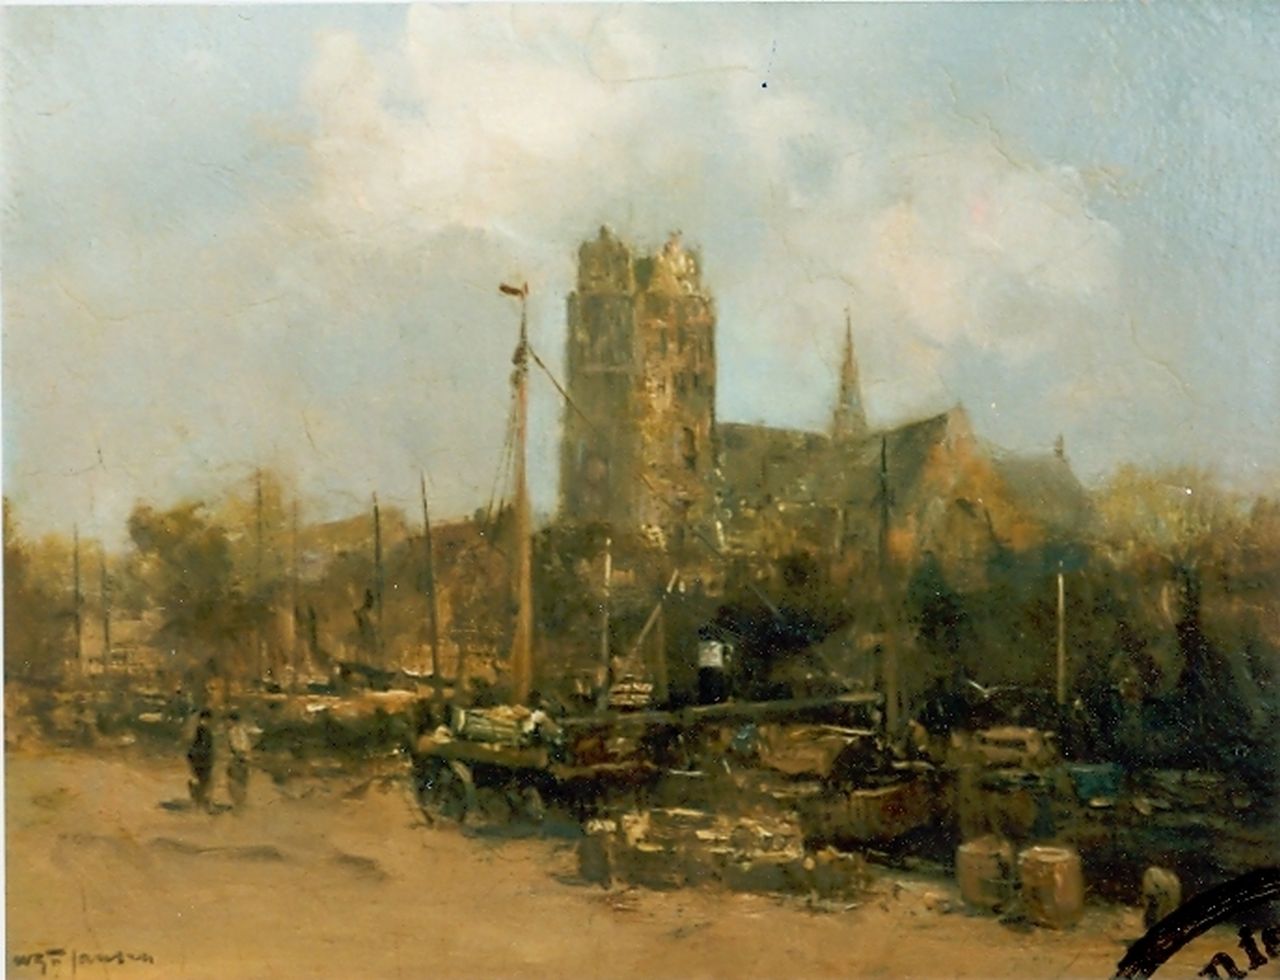 Jansen W.G.F.  | 'Willem' George Frederik Jansen, Kalkoven te Dordrecht, olieverf op doek 33,5 x 41,5 cm, gesigneerd linksonder